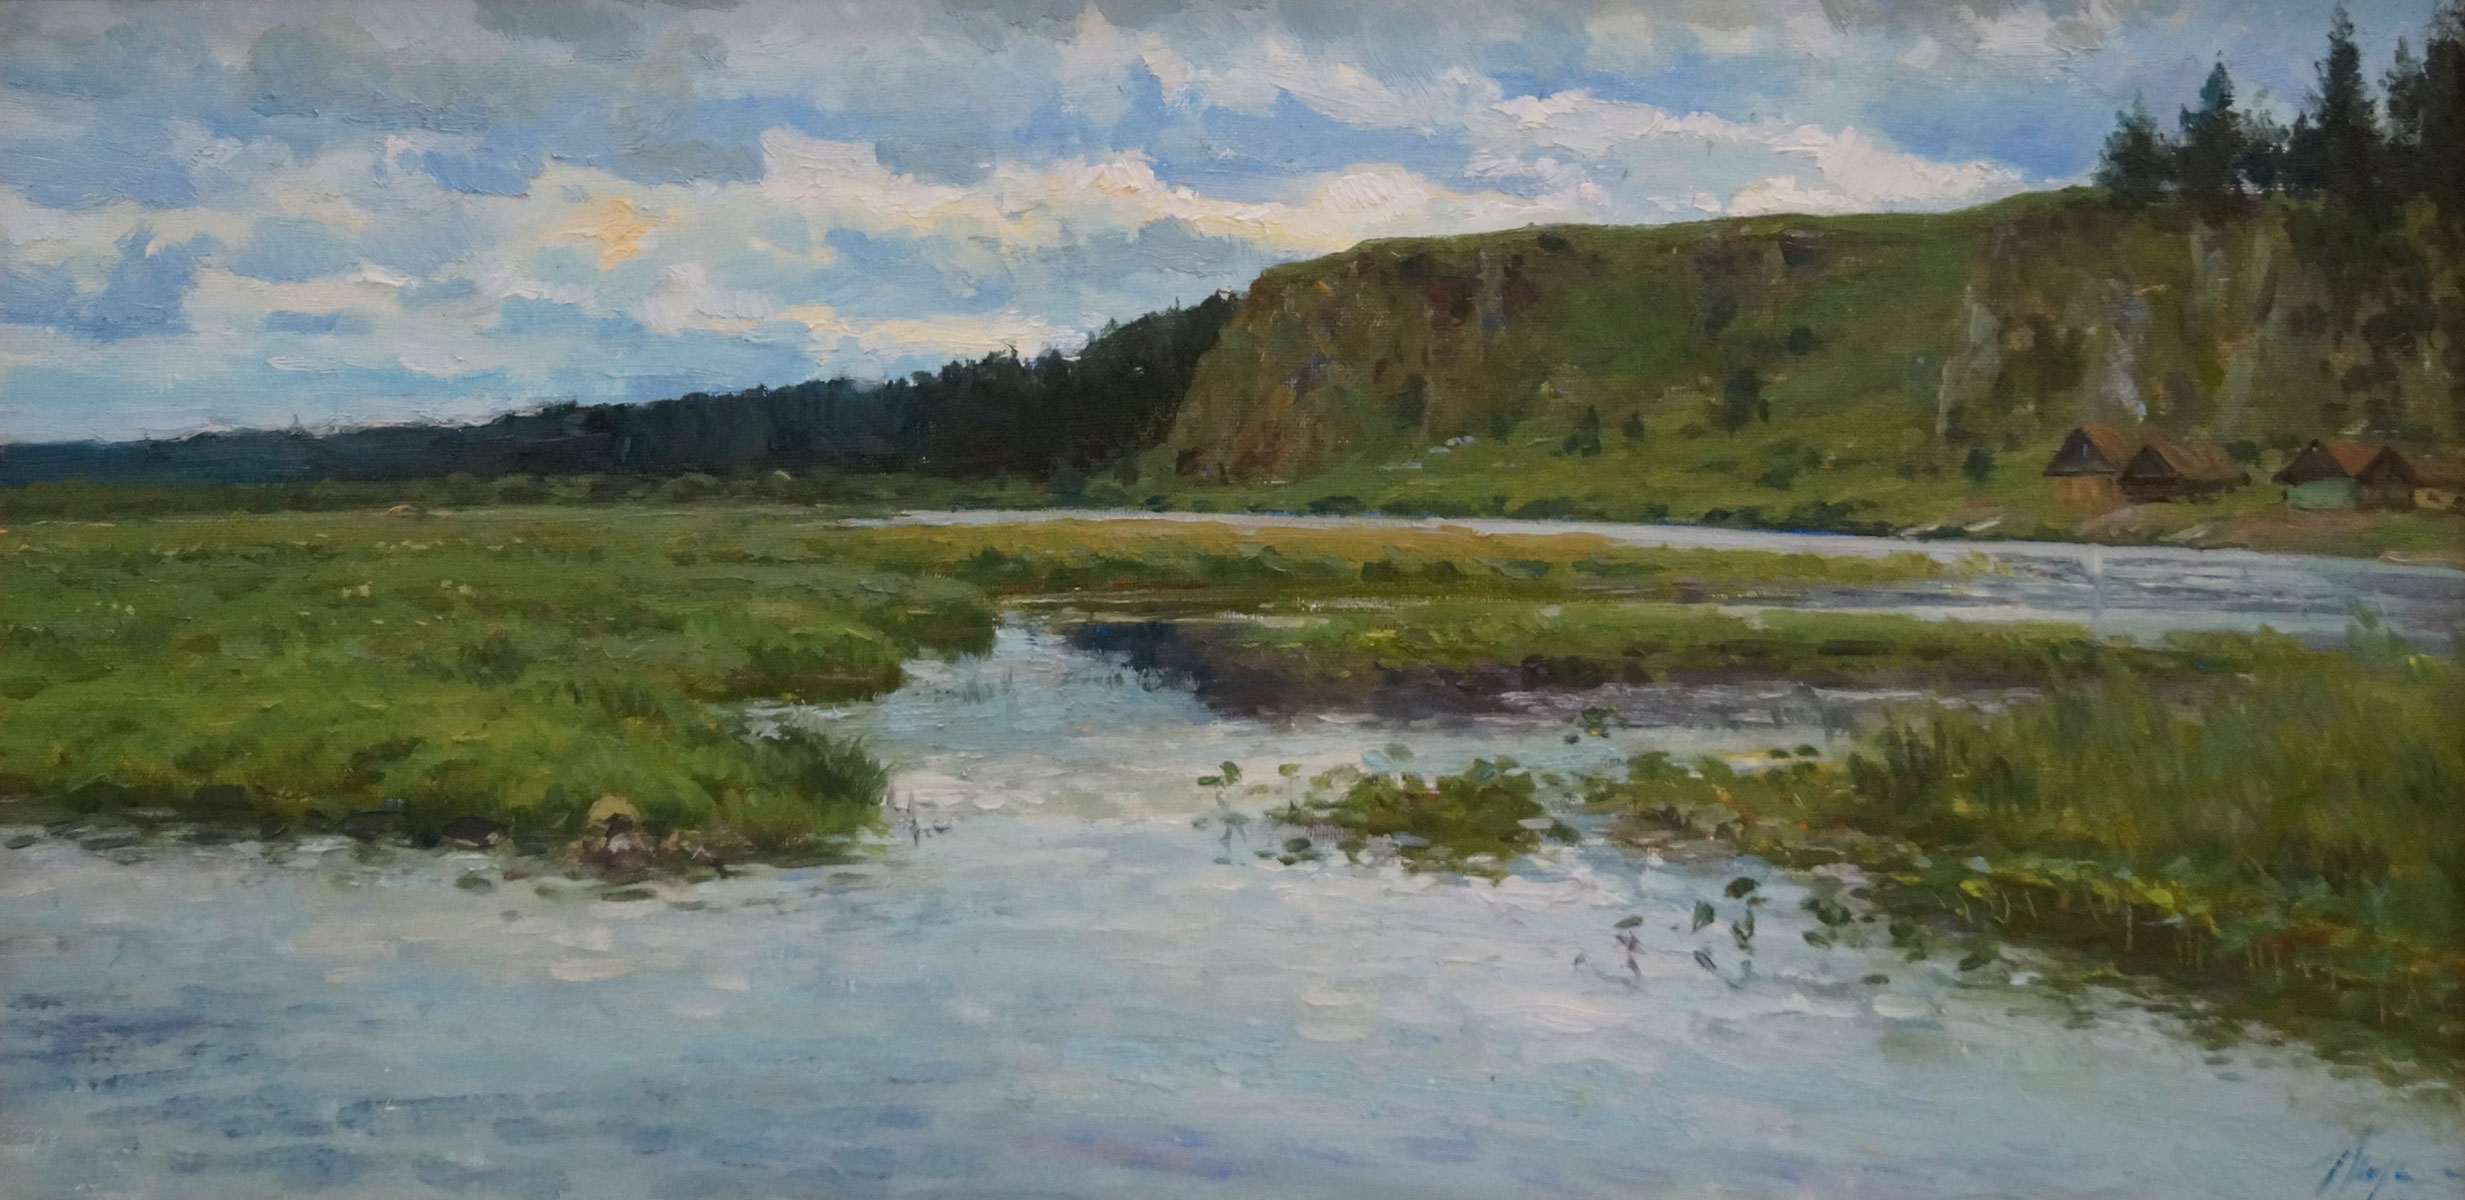 Chusovaya River Flows - 1, Rustem Khuzin, Buy the painting Oil